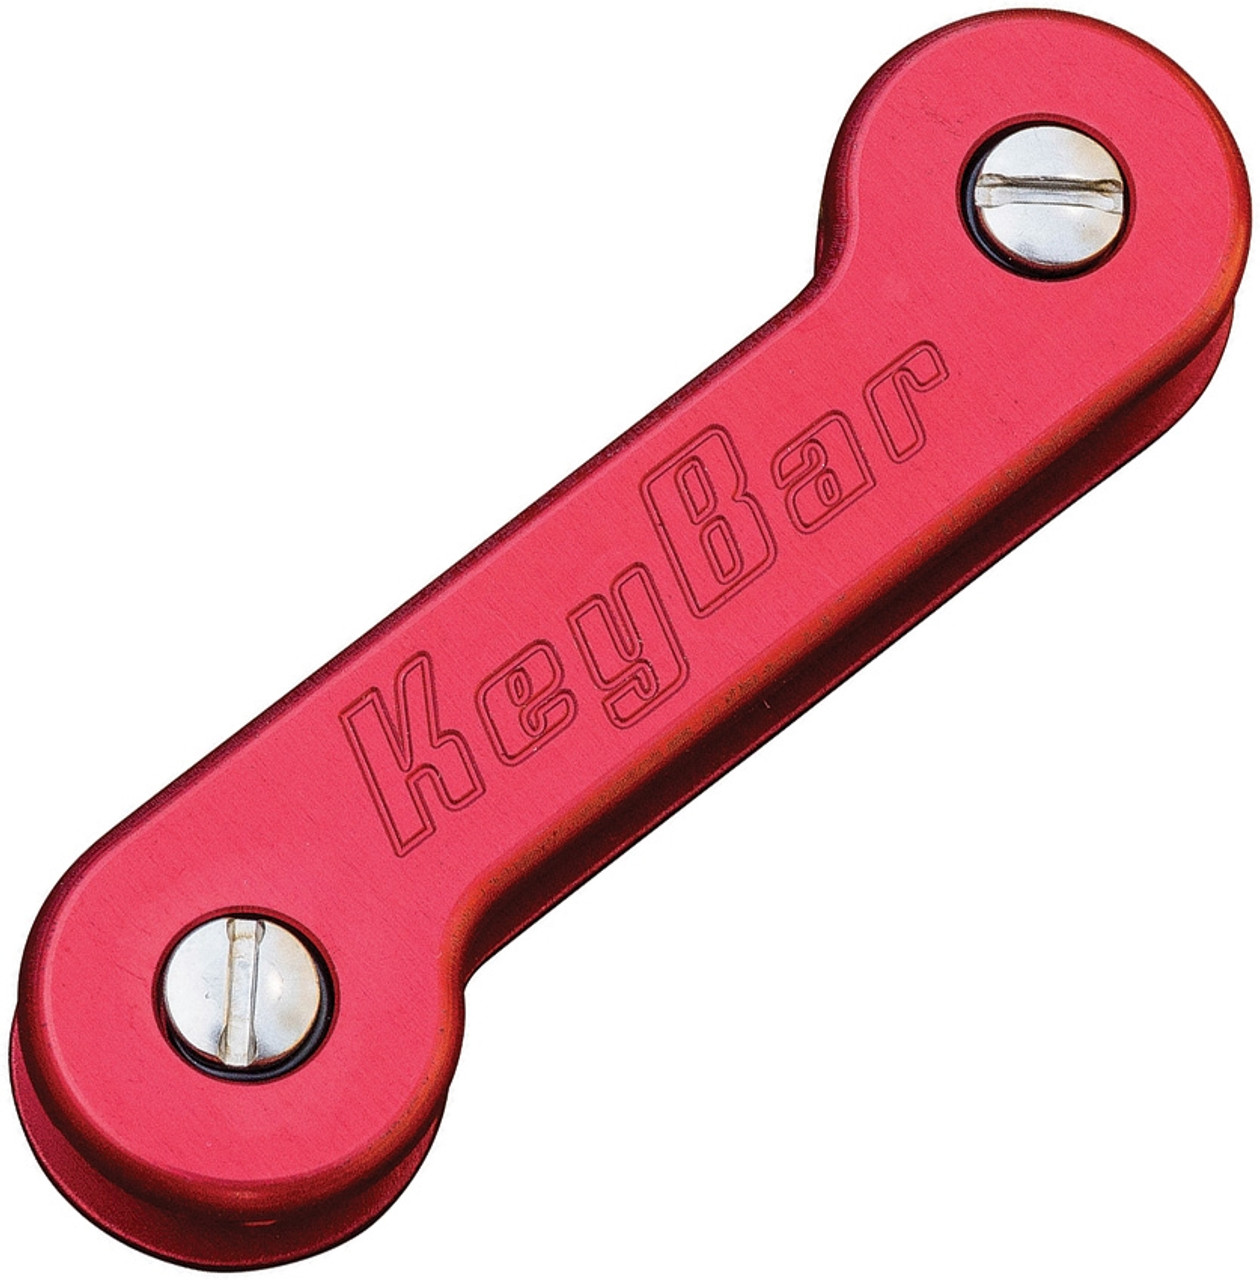 KeyBar Anodized Aluminum Red - Key Holder/Organizer (Holds up to 12 Keys)